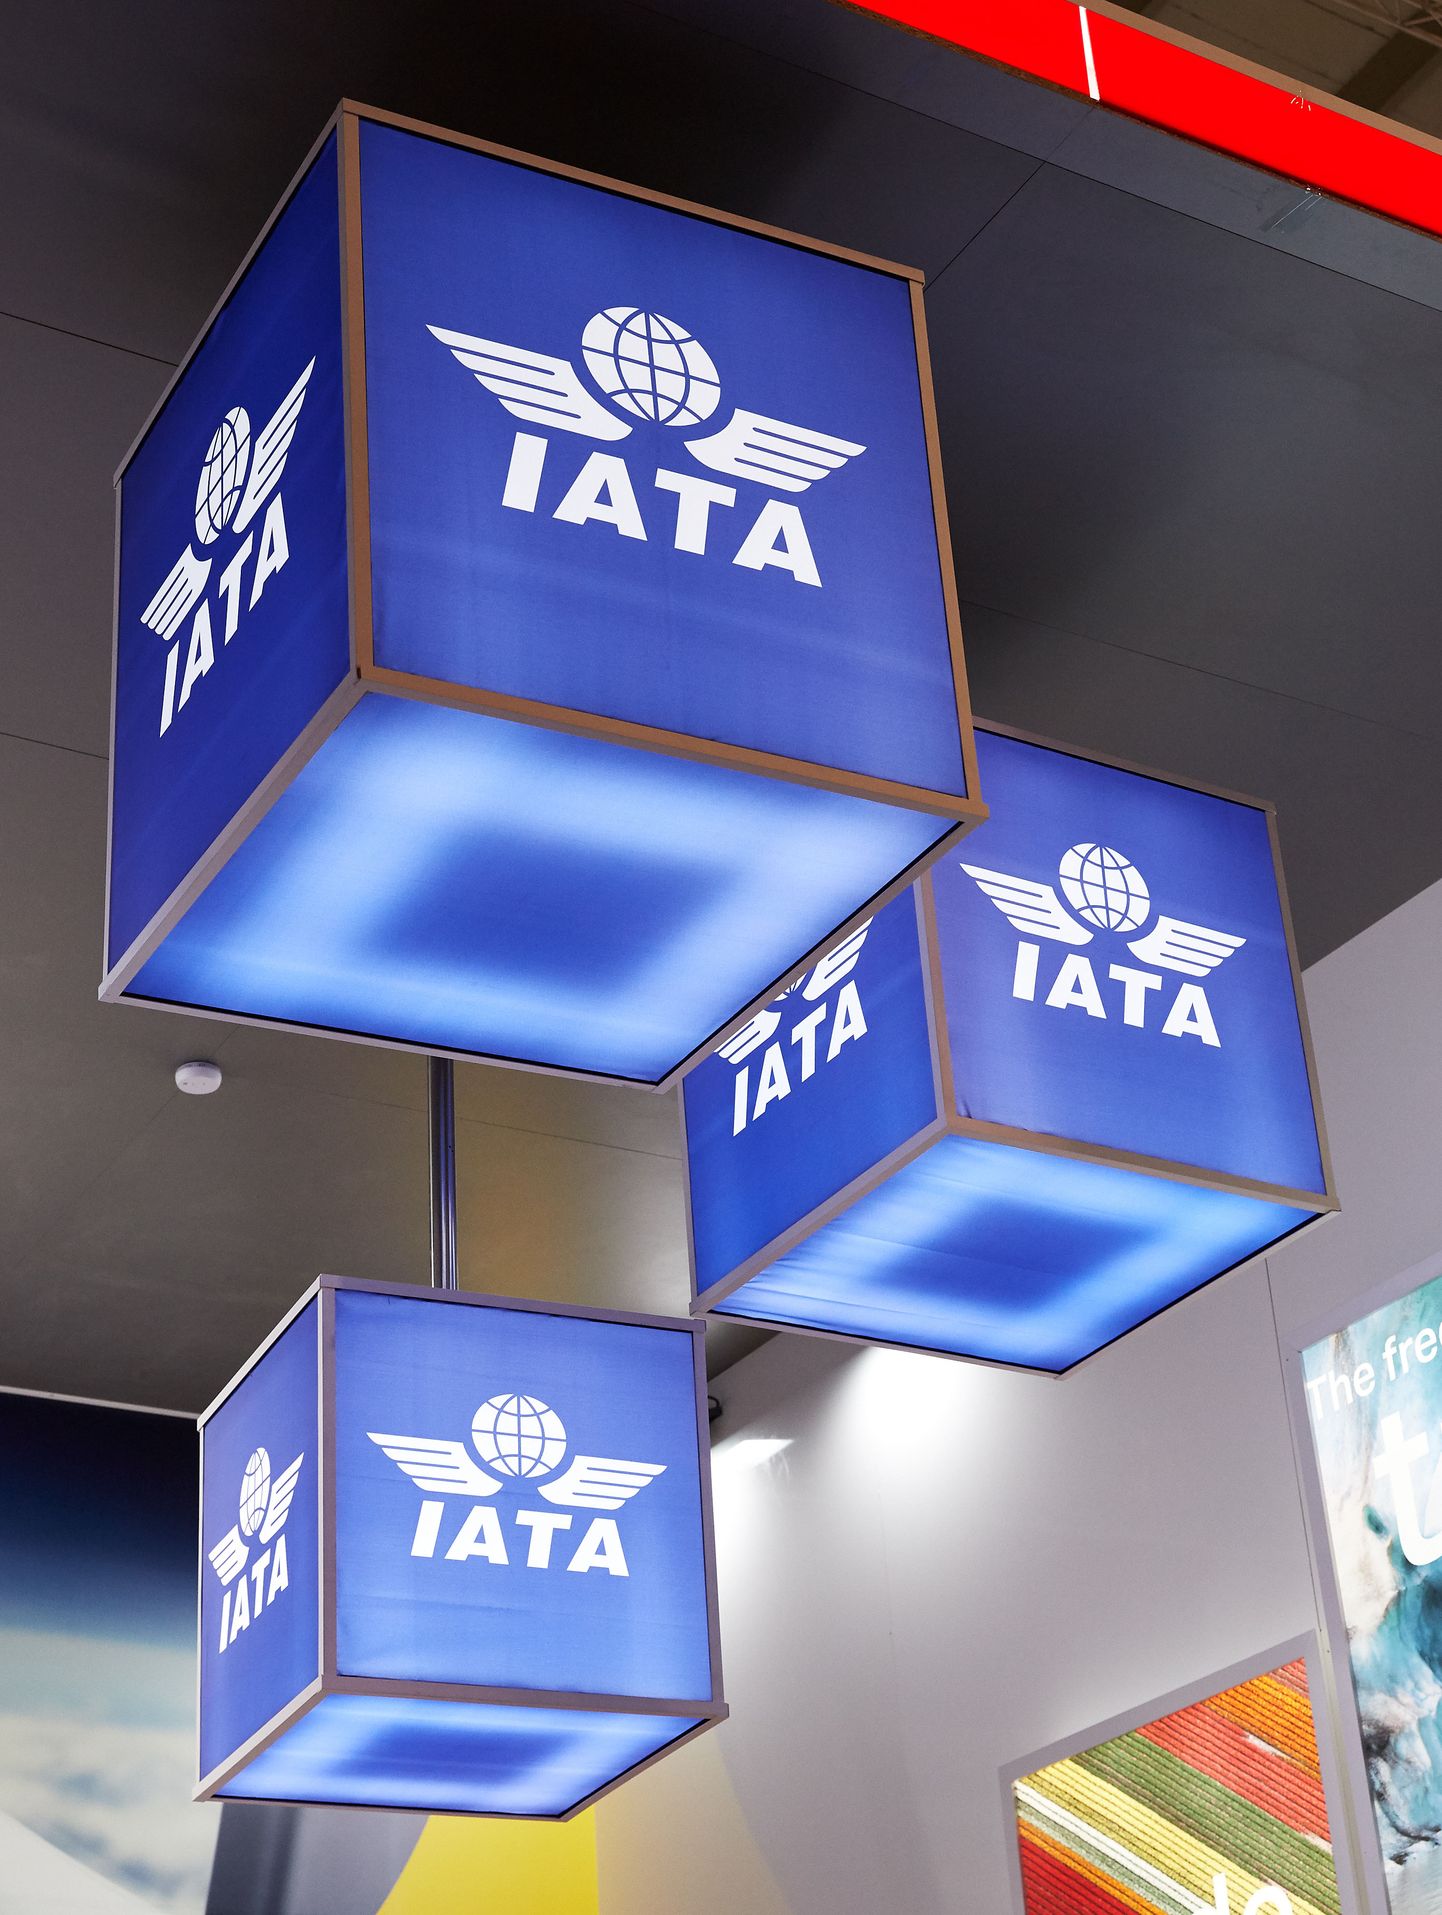 IATA logo.